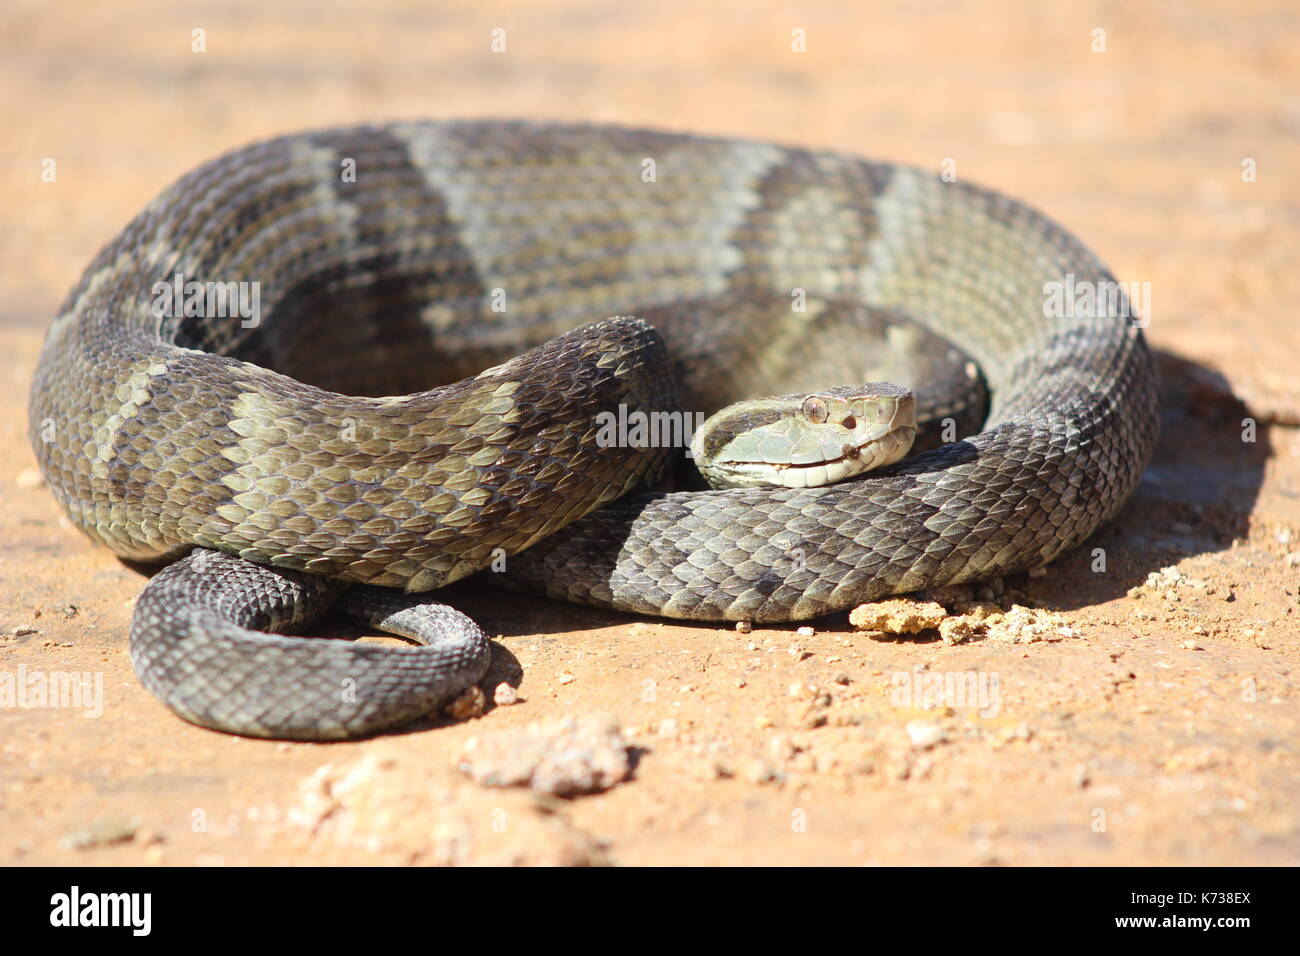 Native Brazilian snake Stock Photo